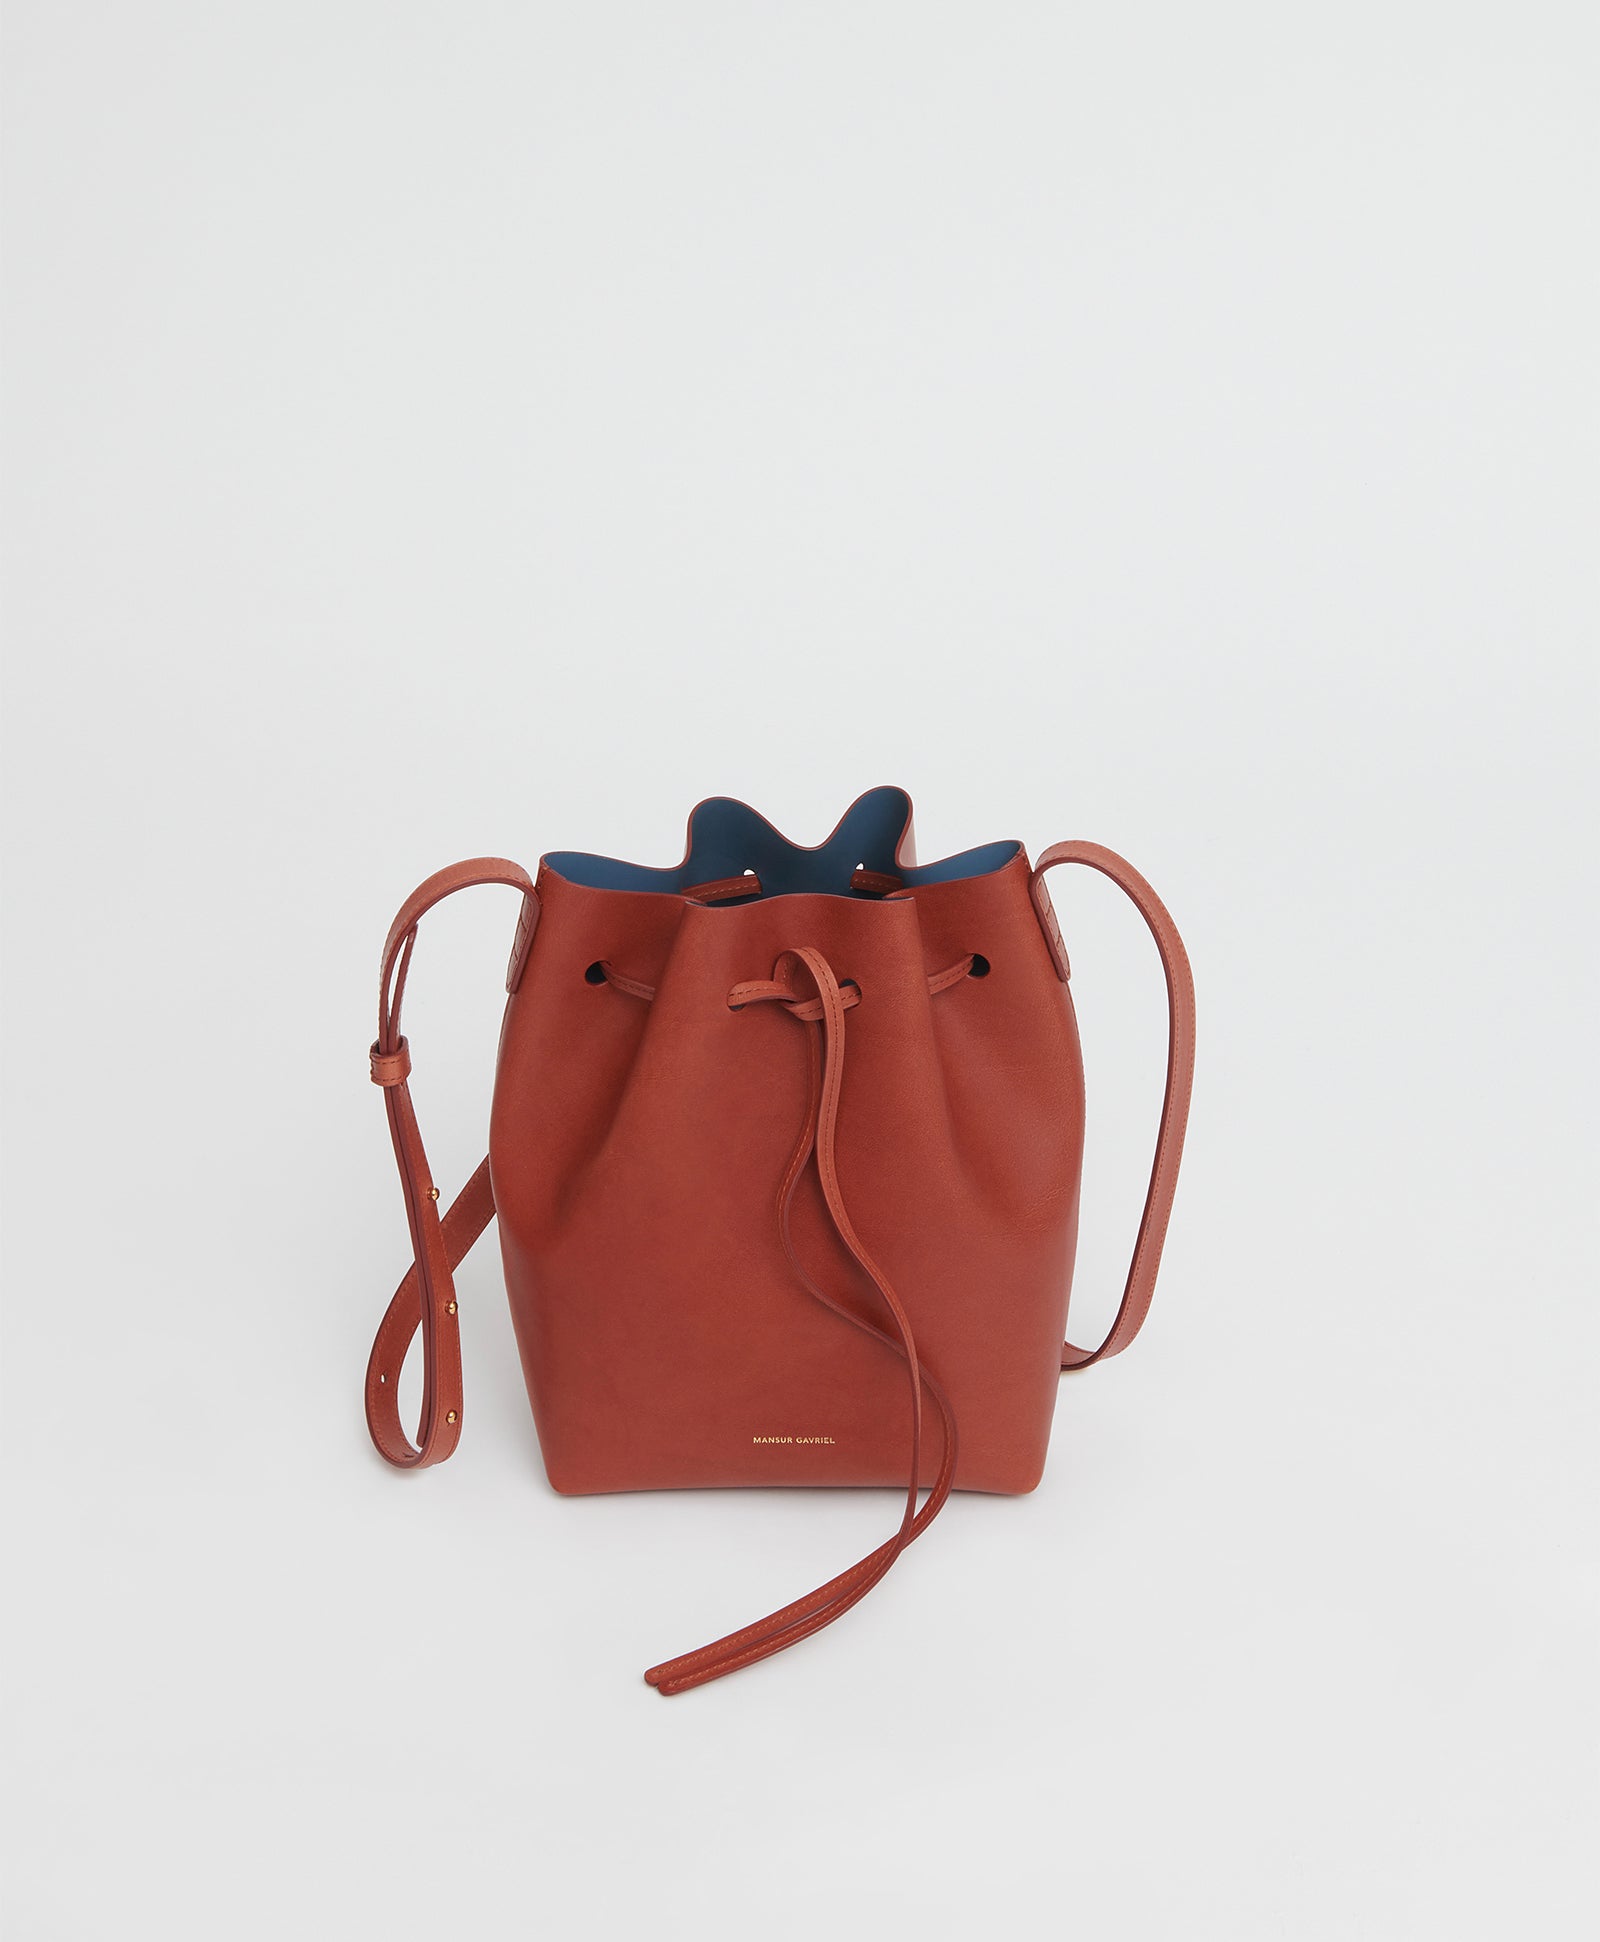 Major Hemispheric Handbag - Made in Italy, vegetable tan leather